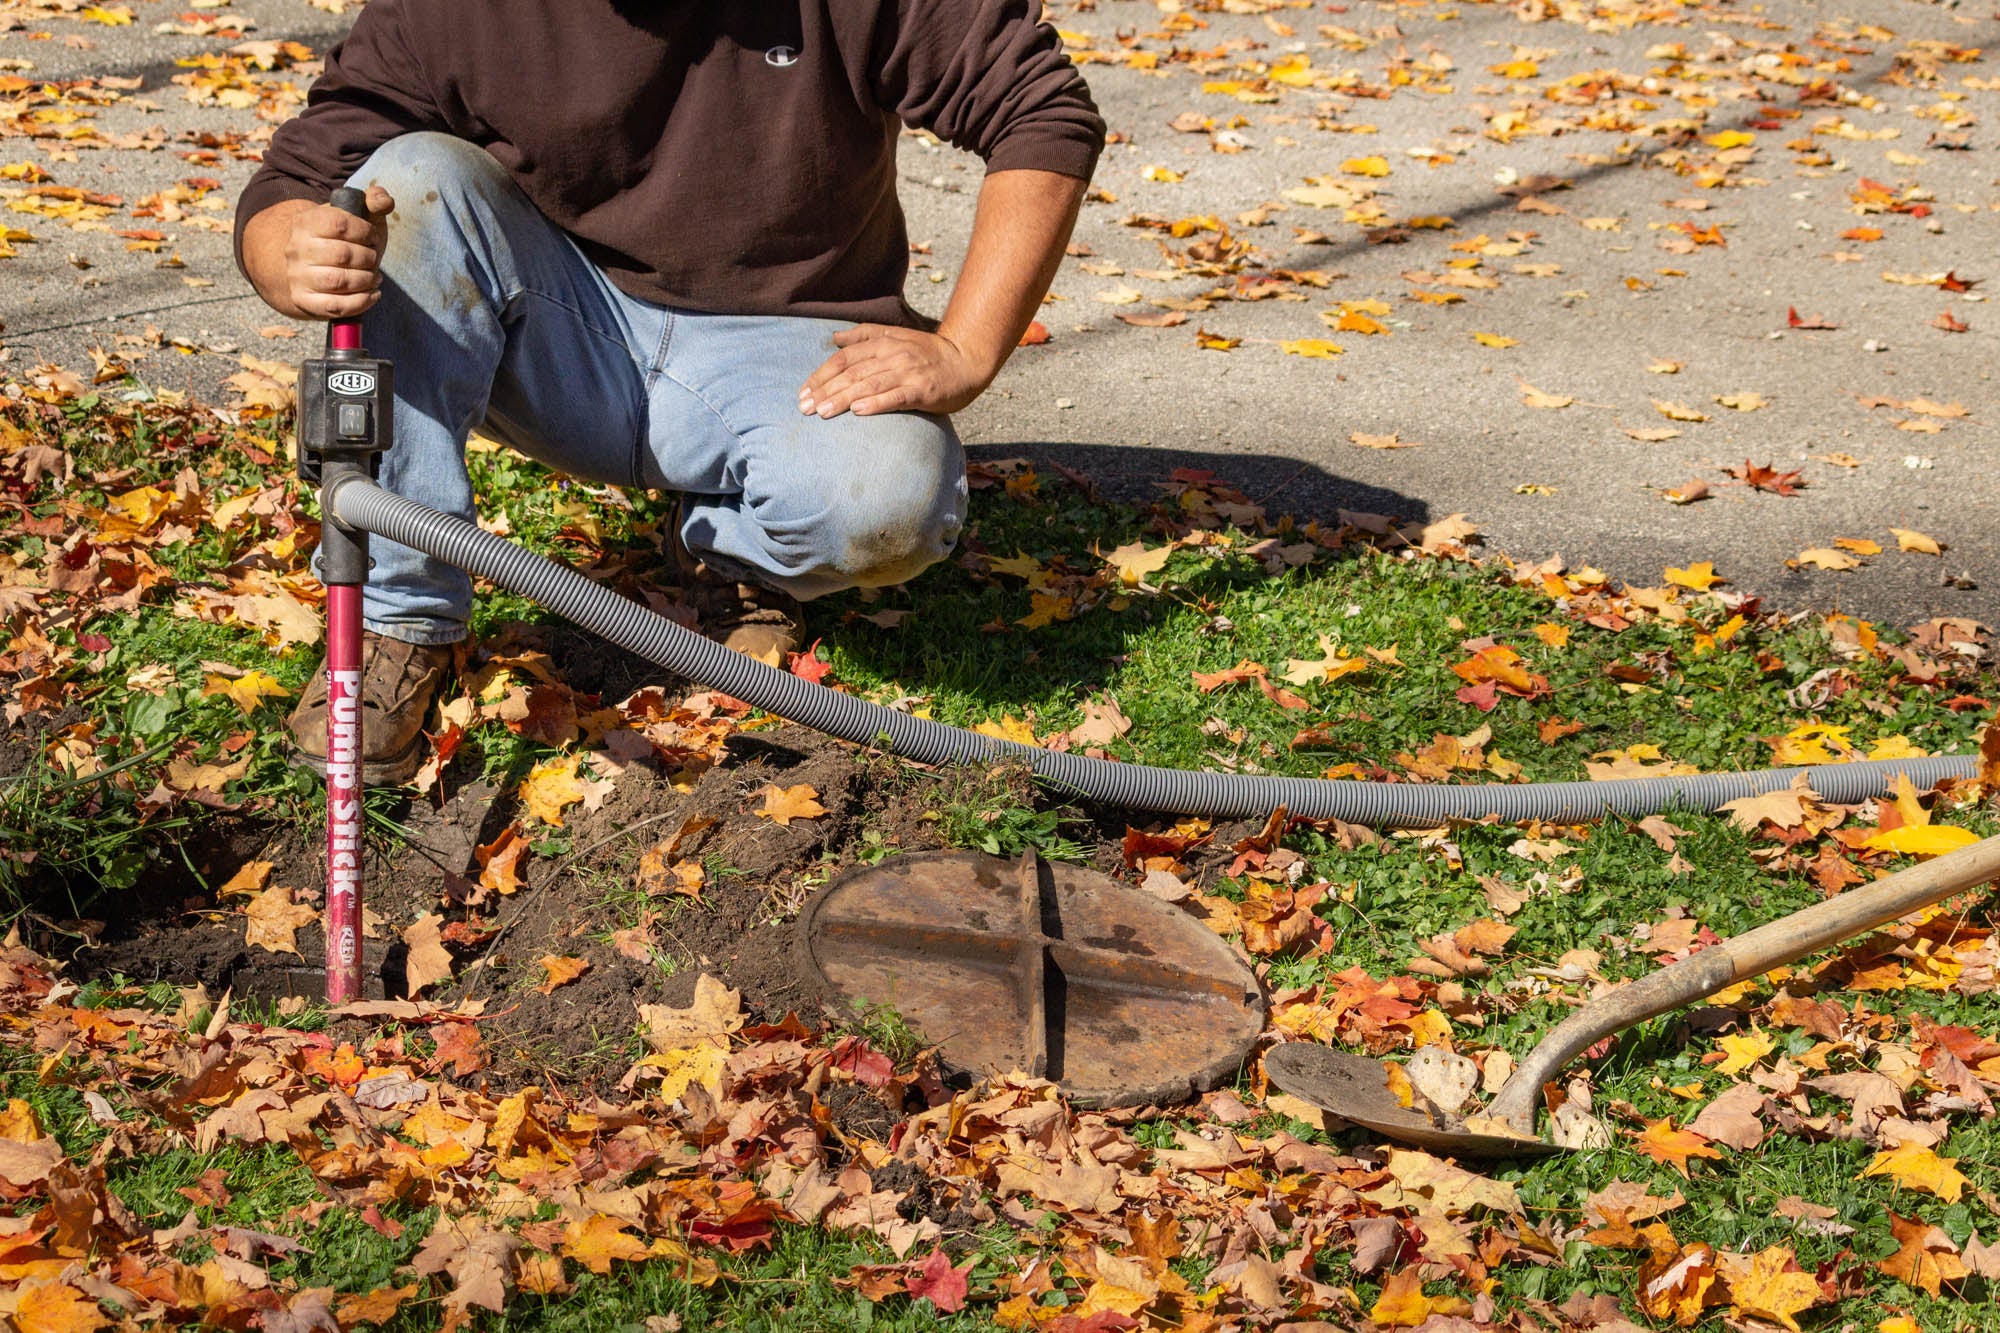 Reed Pump Stick® Cordless Water Transfer Pump